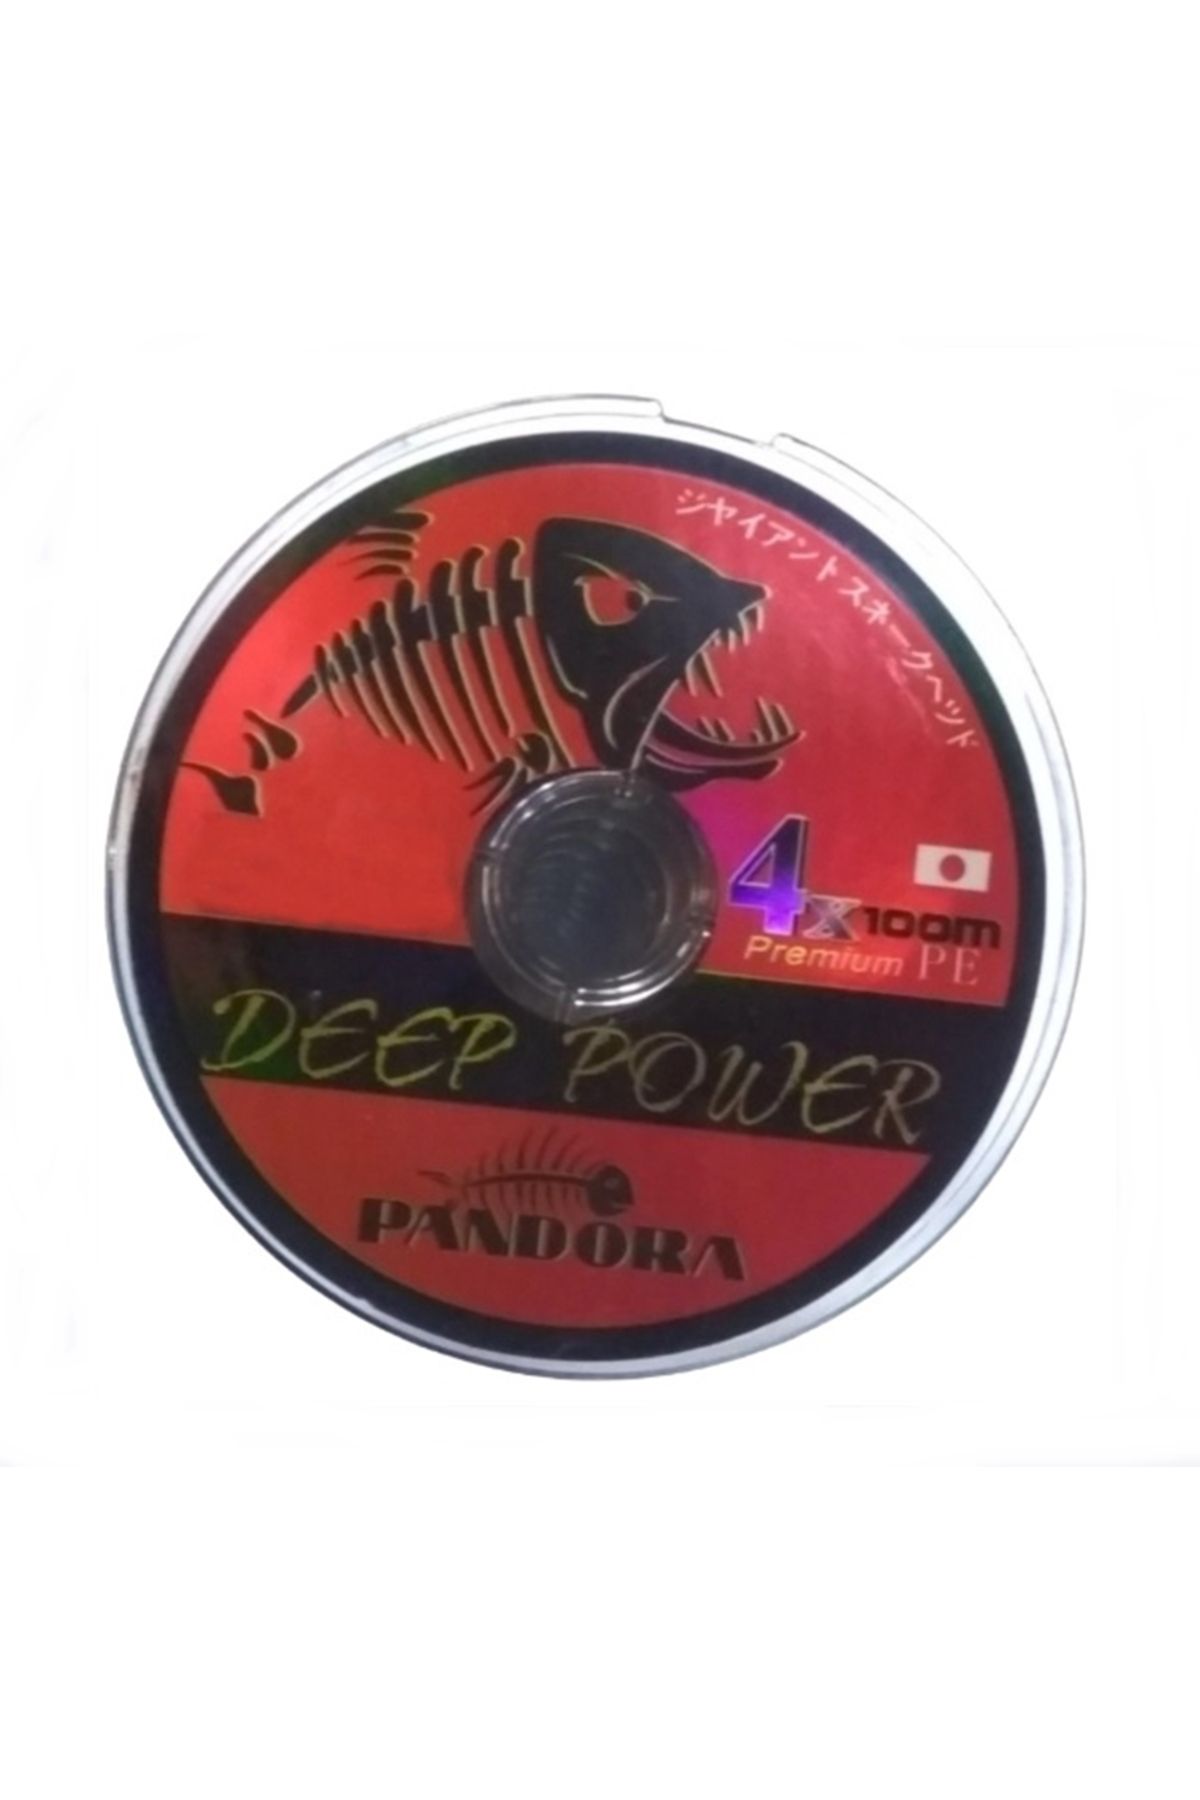 Pandora Deep Power 4x 100mt Ipek Misina Dia.0.31mm Test: 25.0 Kg